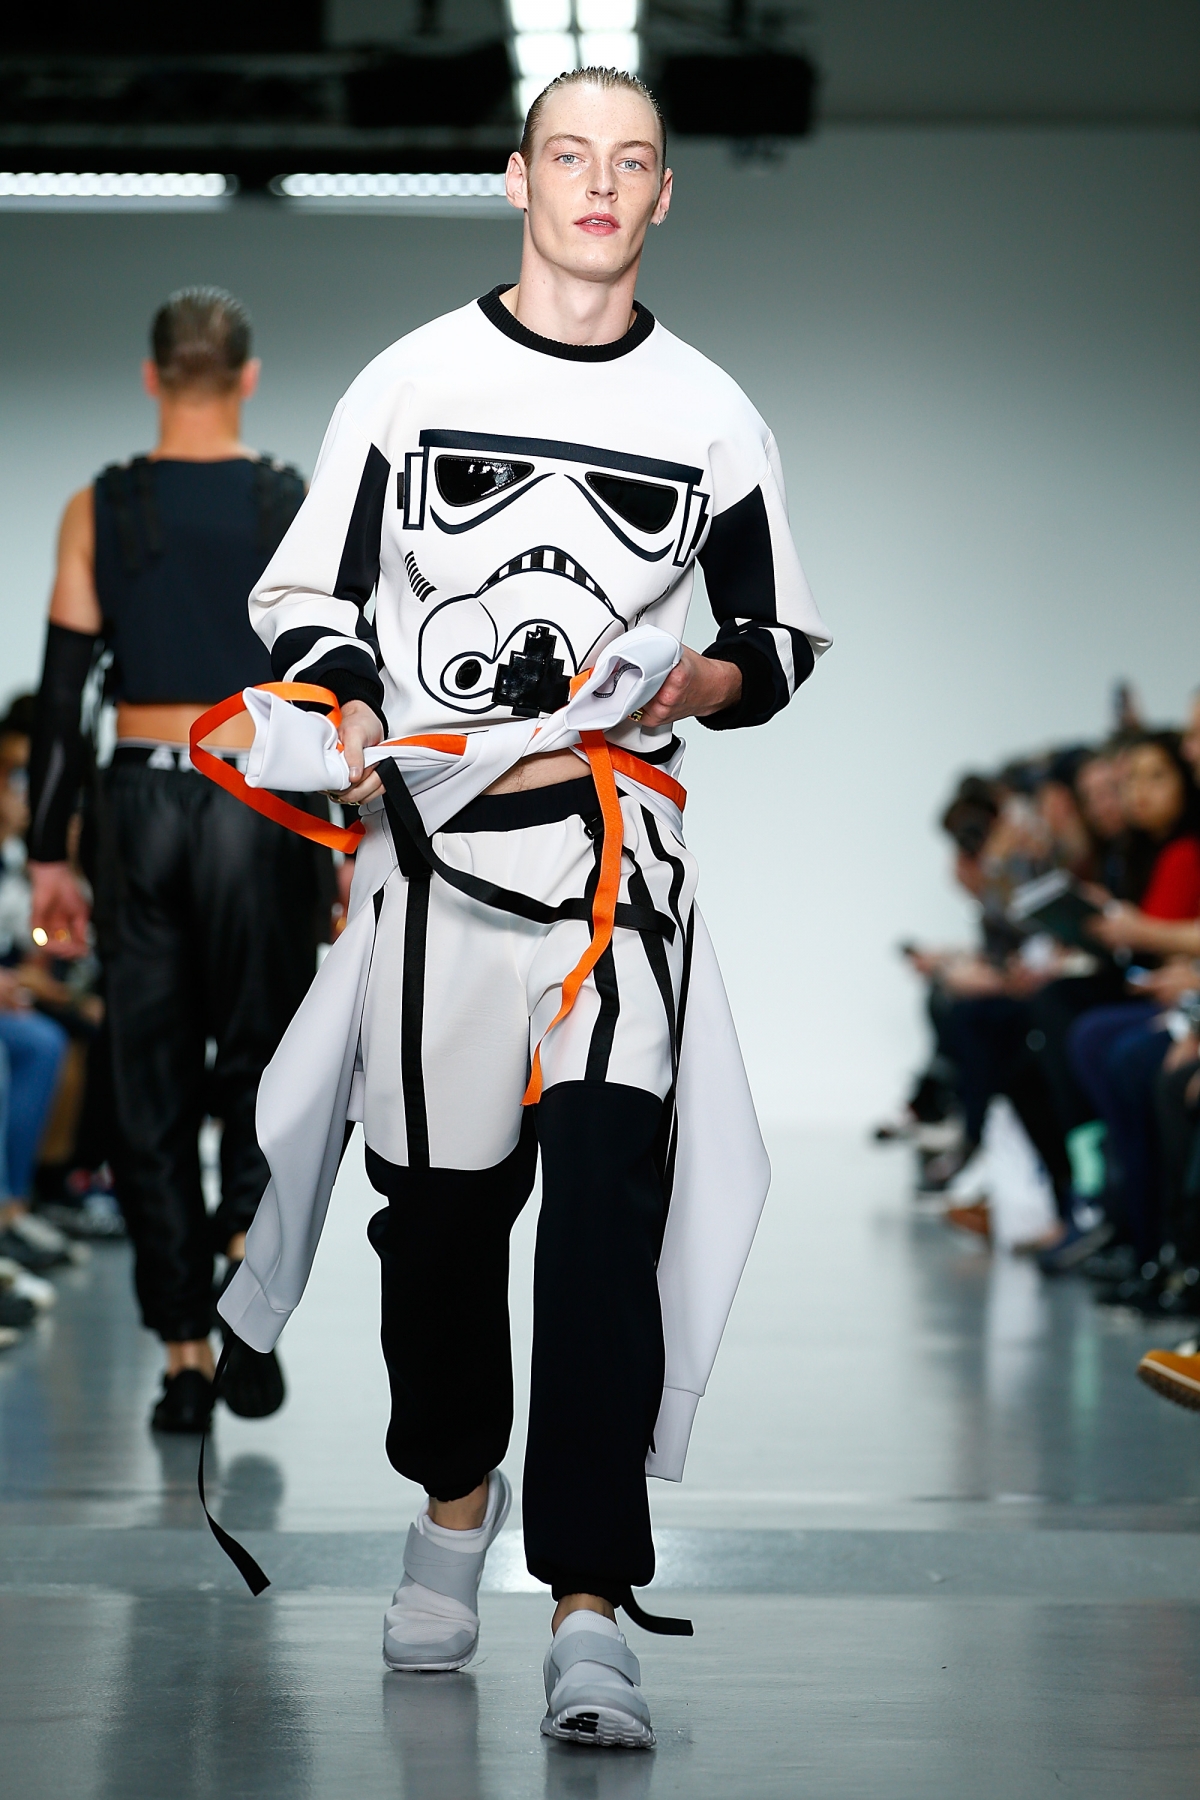 Star Wars Style: Force Awakening fashion to buy now